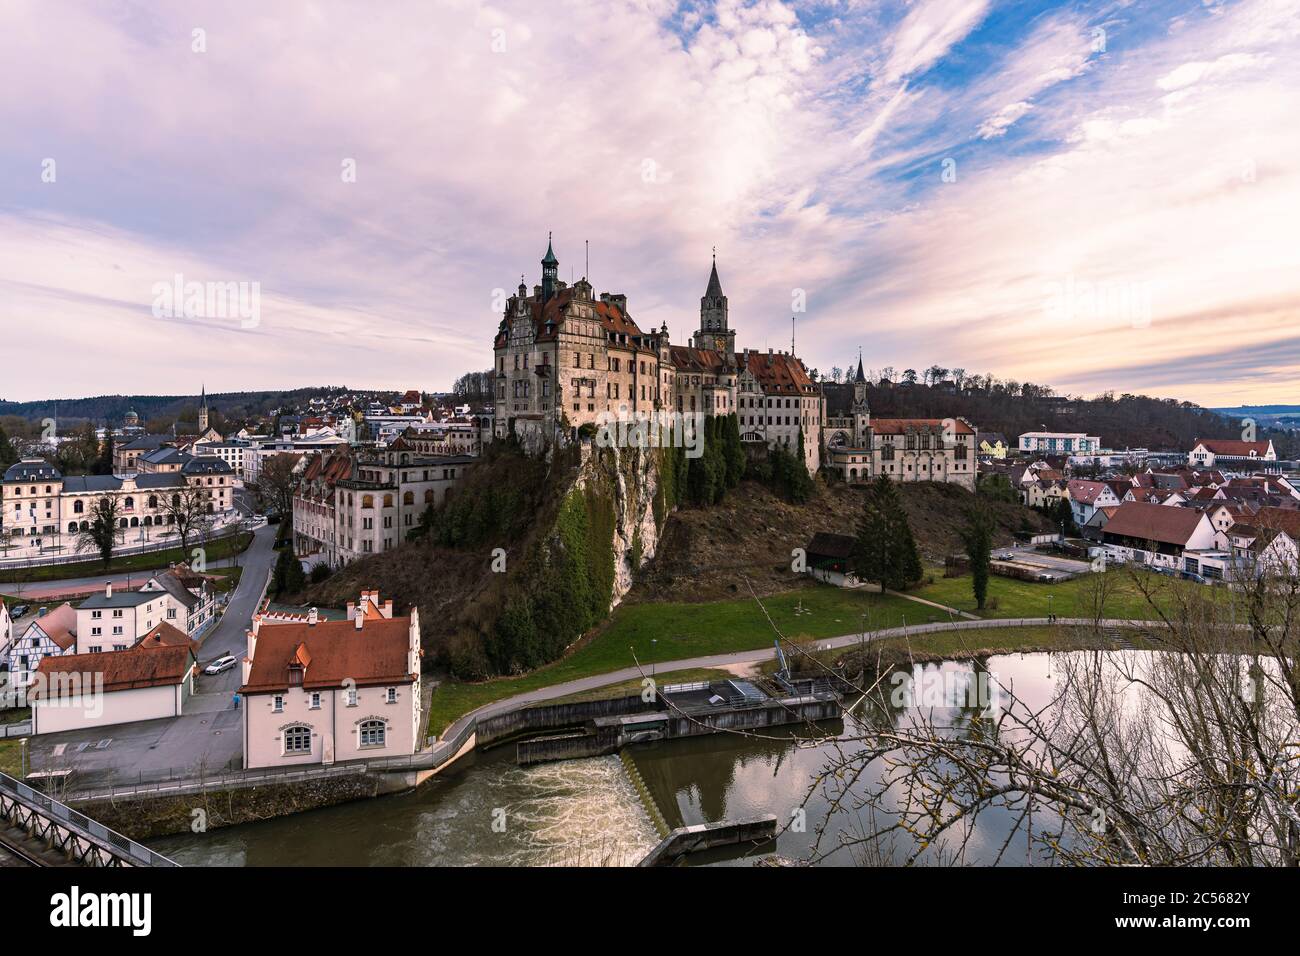 Sigmaringen Castle, Prince of Hohenzollern, Danube, Sigmaringen, Baden-Wuerttemberg, Germany, Europe Stock Photo